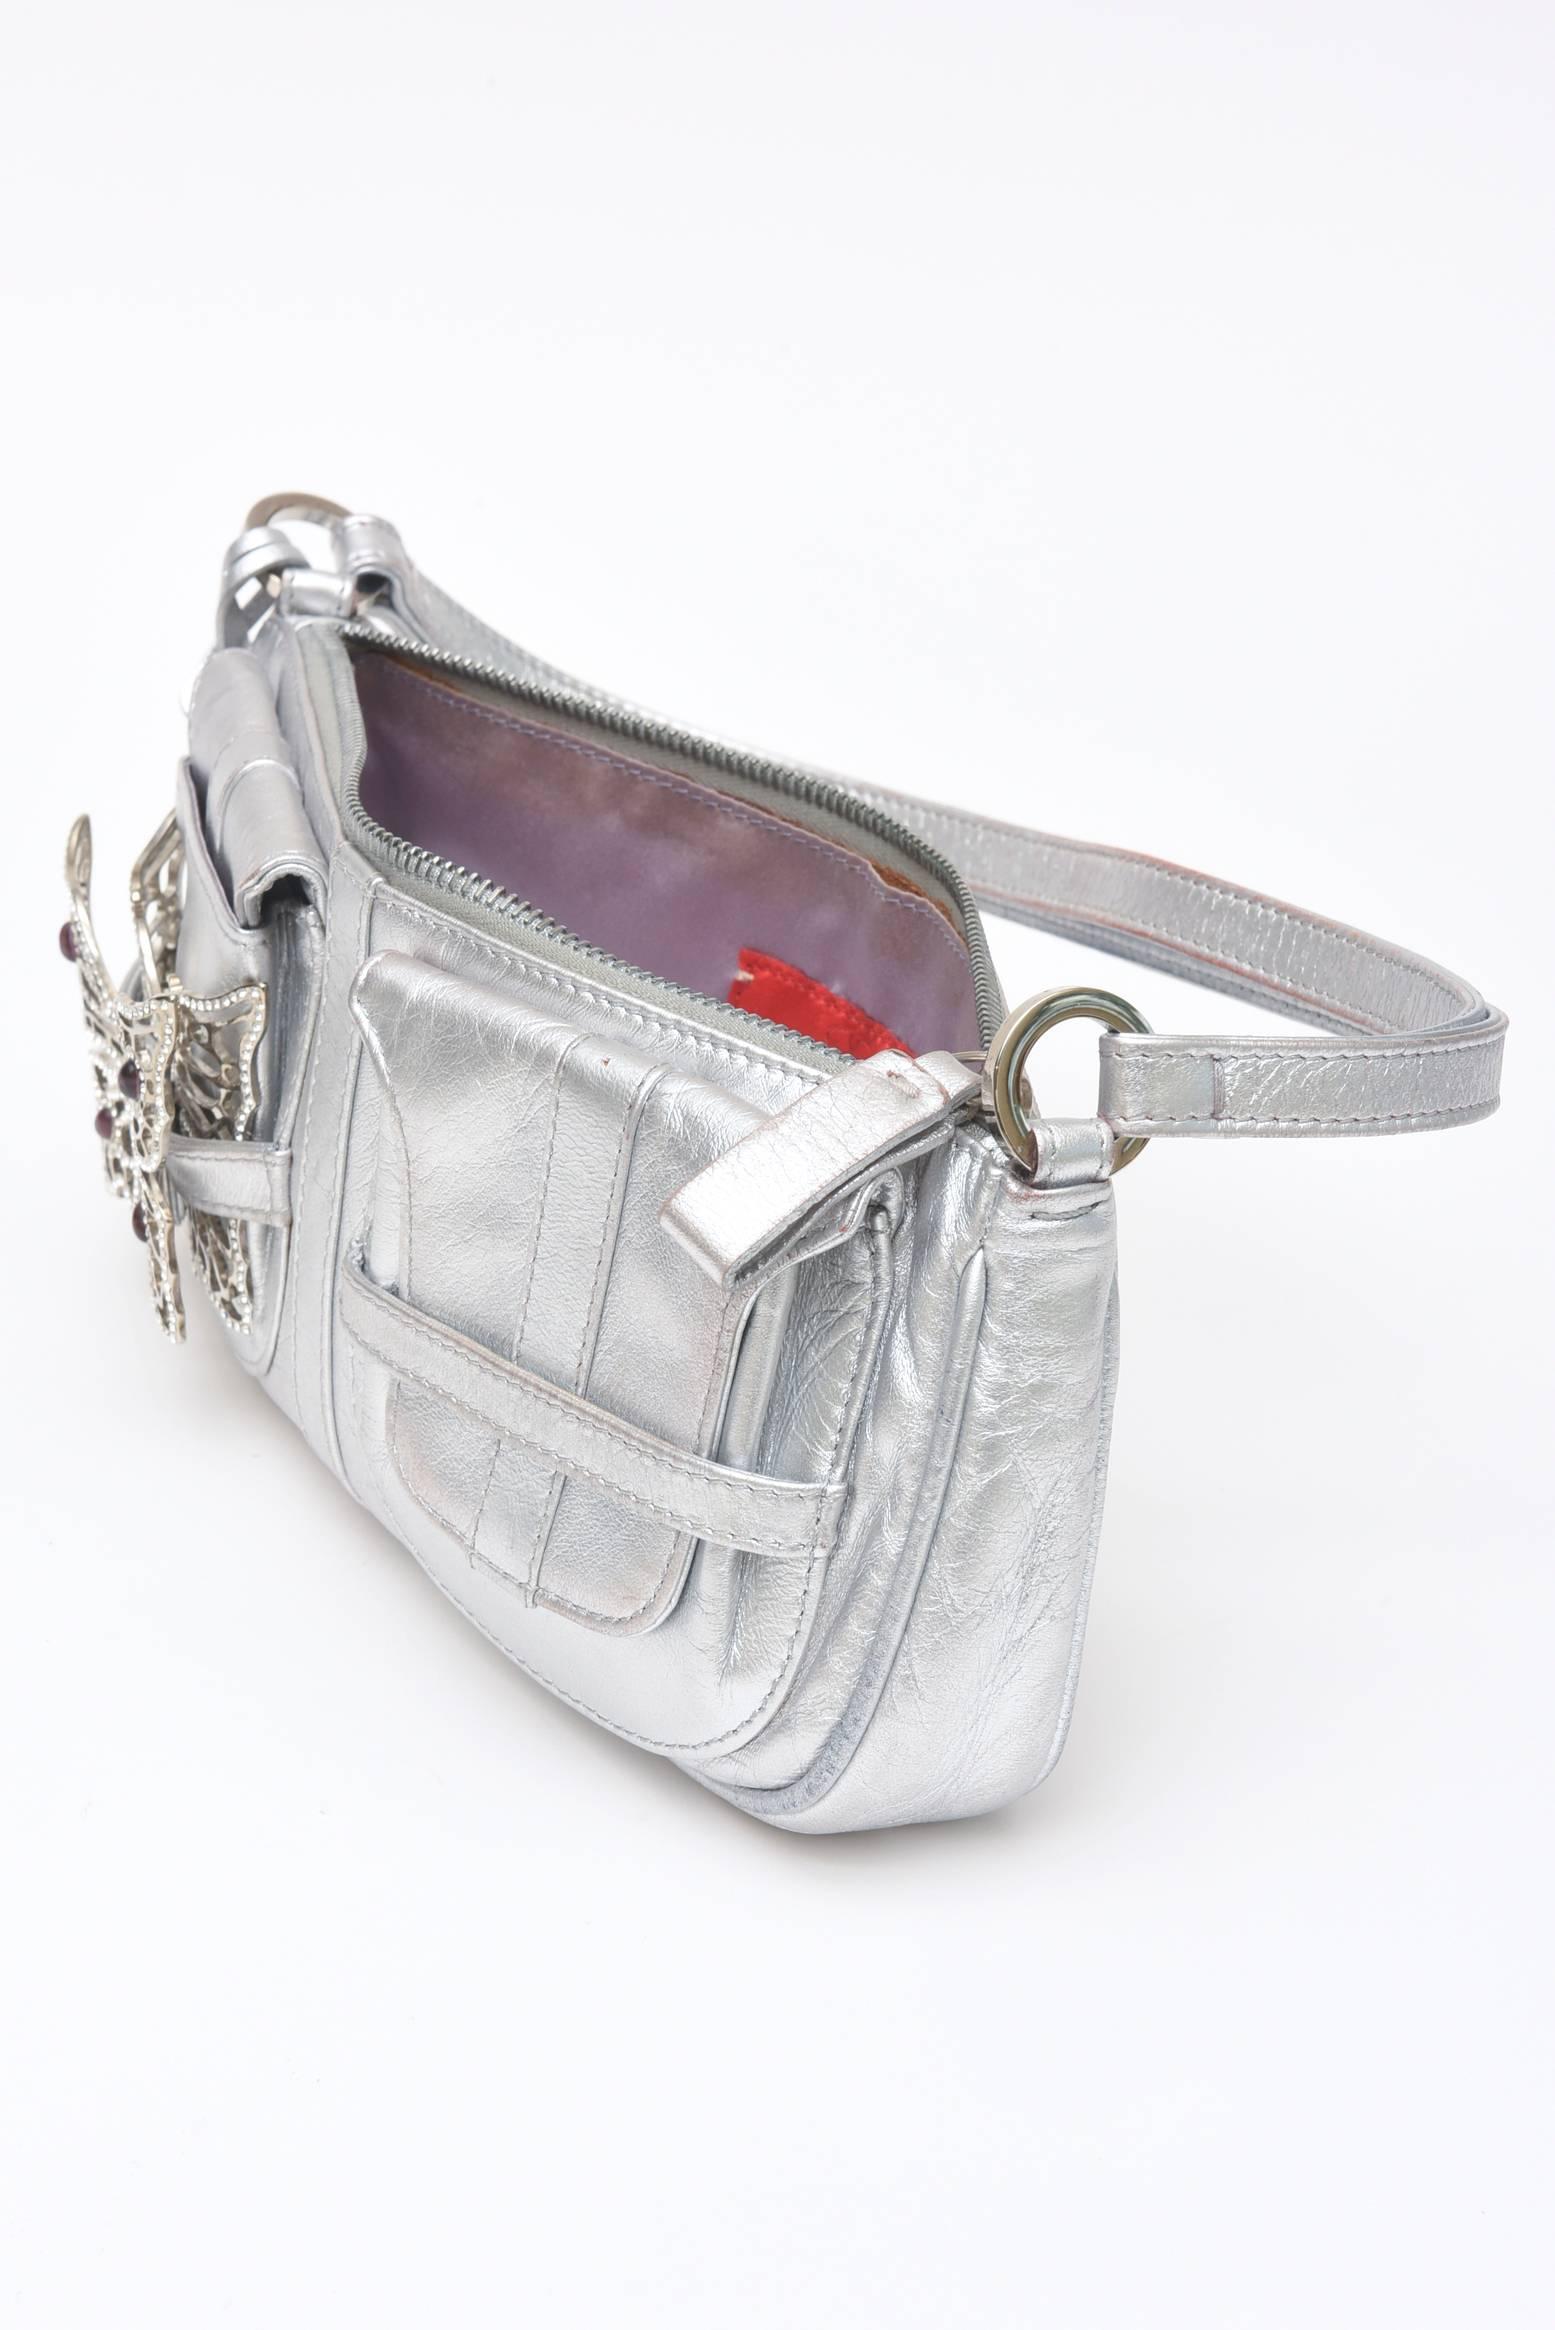 Women's Hallmarked Valentino Silver Lambskin Handbag with Rhinestone Butterfly